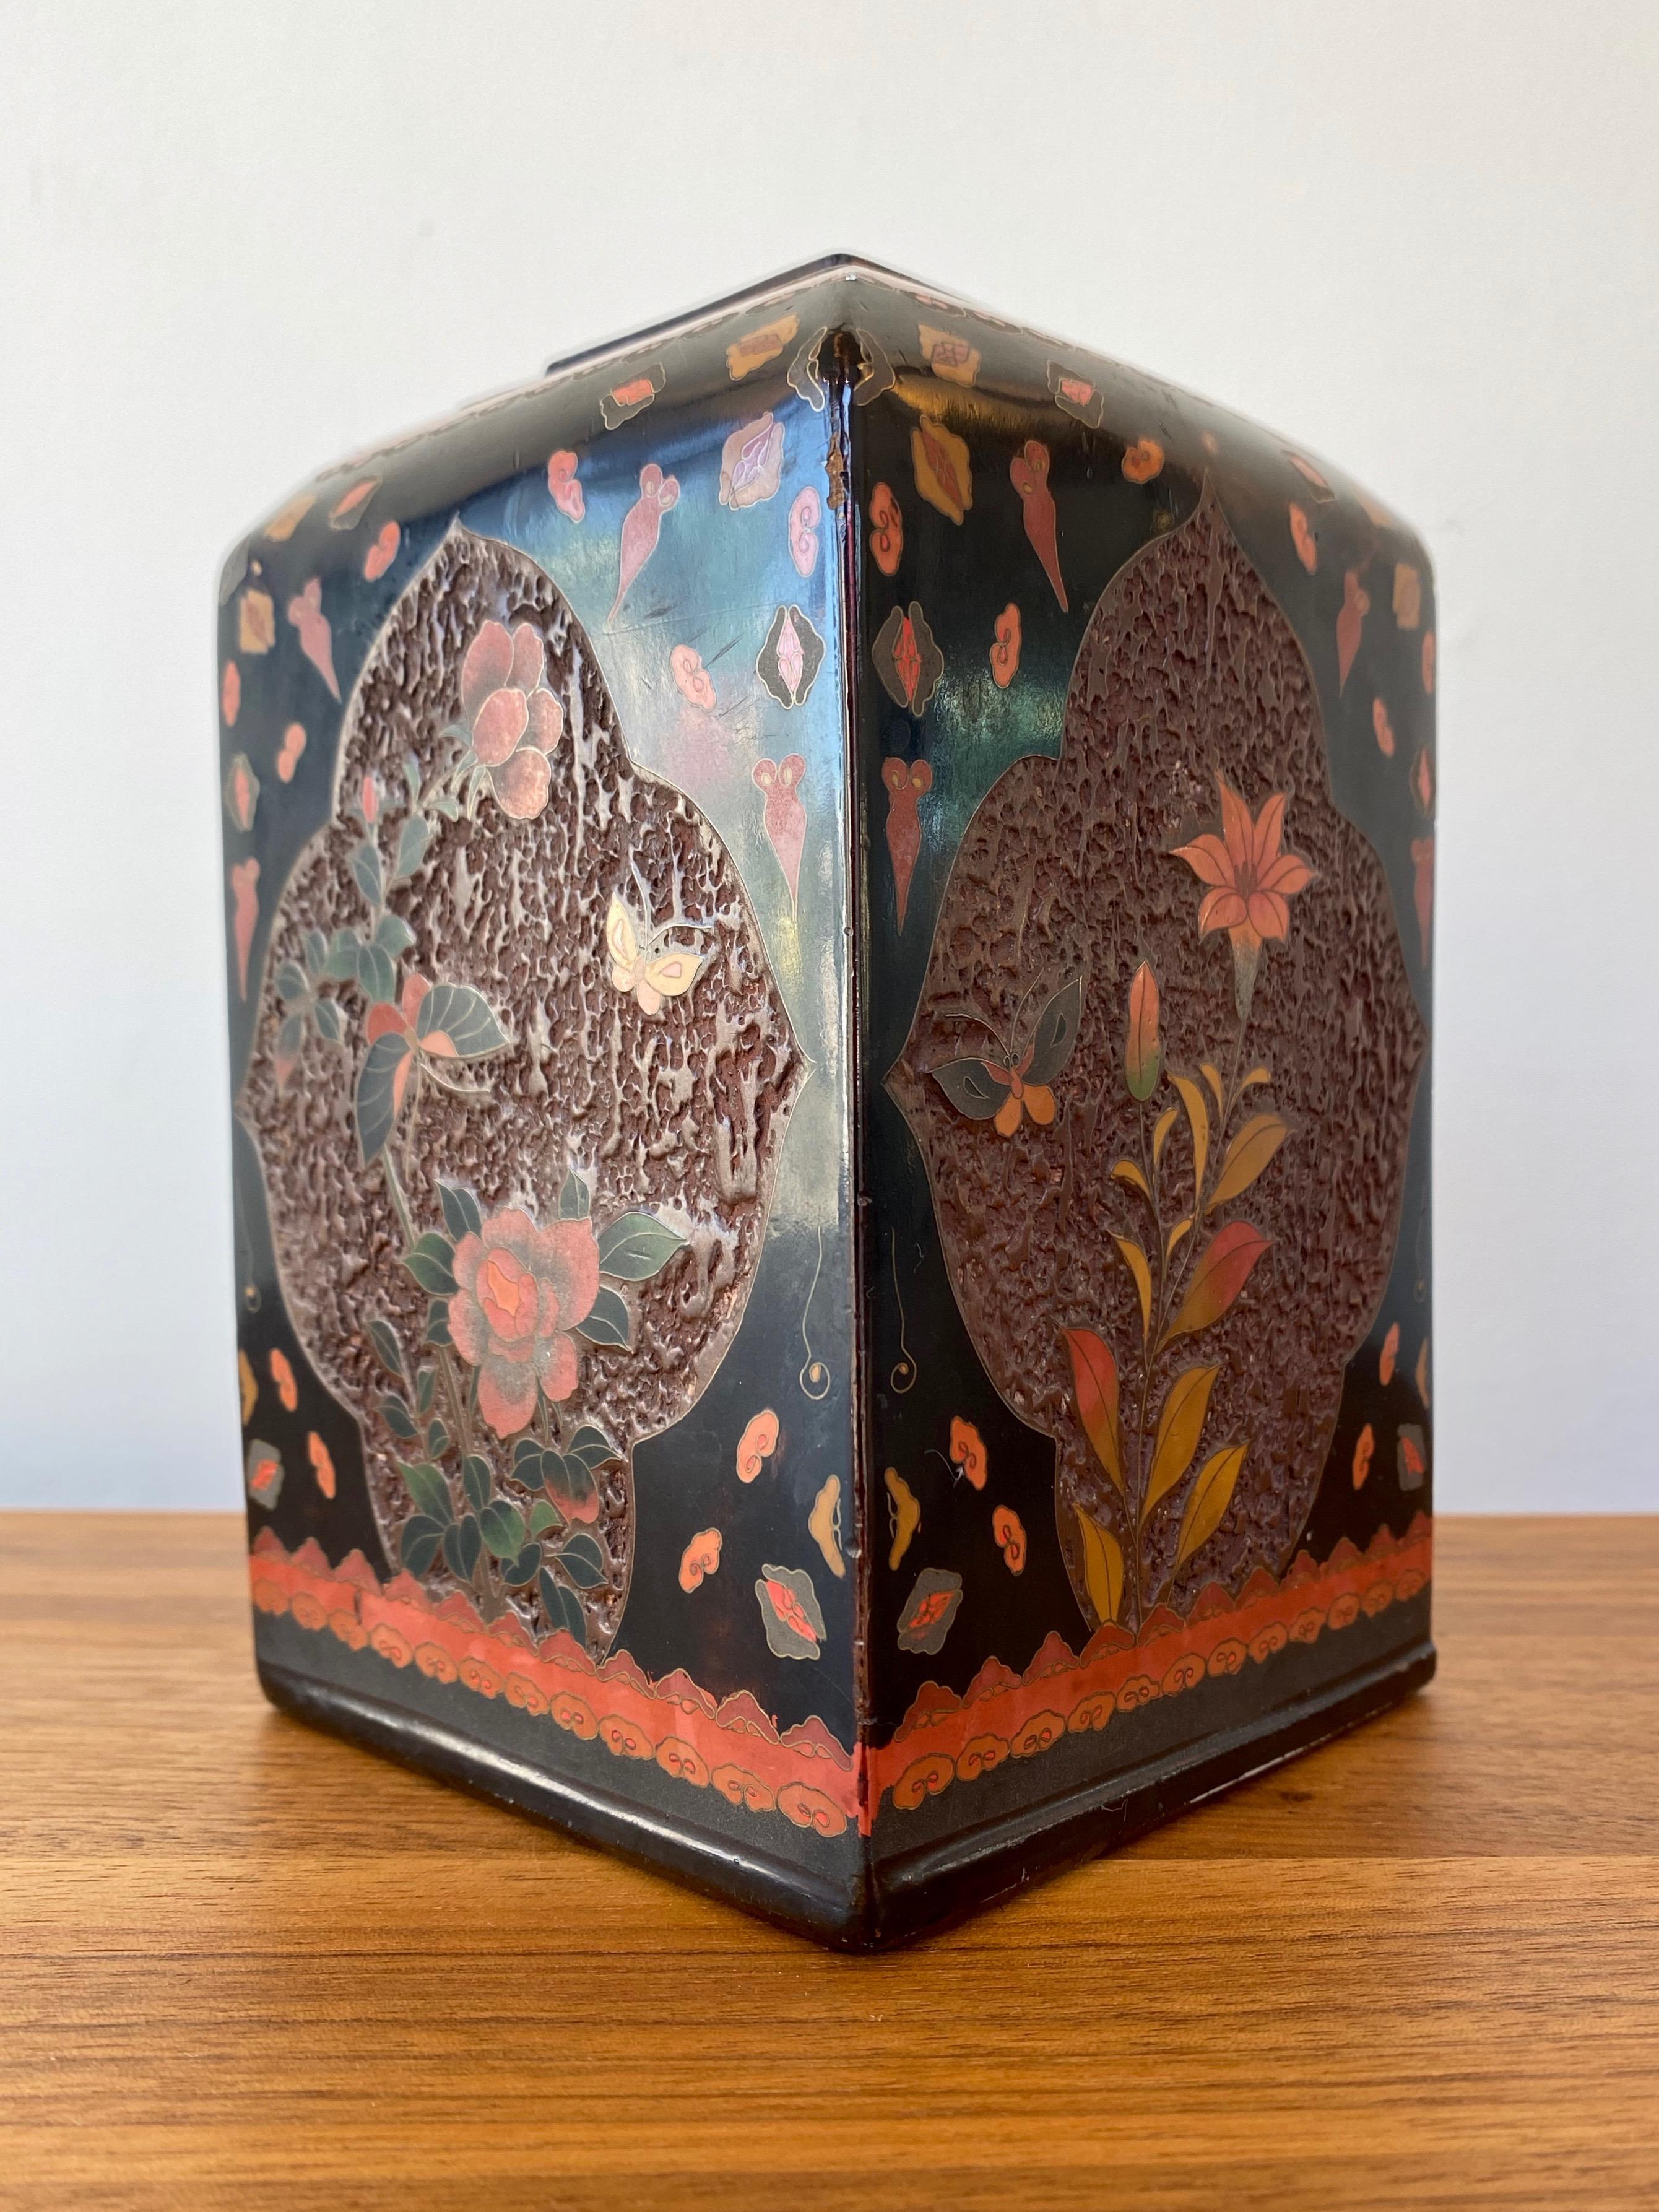 Early 20th Century Japanese Meiji Jiki-Shippo “Tree-Bark” Cloisonné Porcelain Vase, Early 1900s